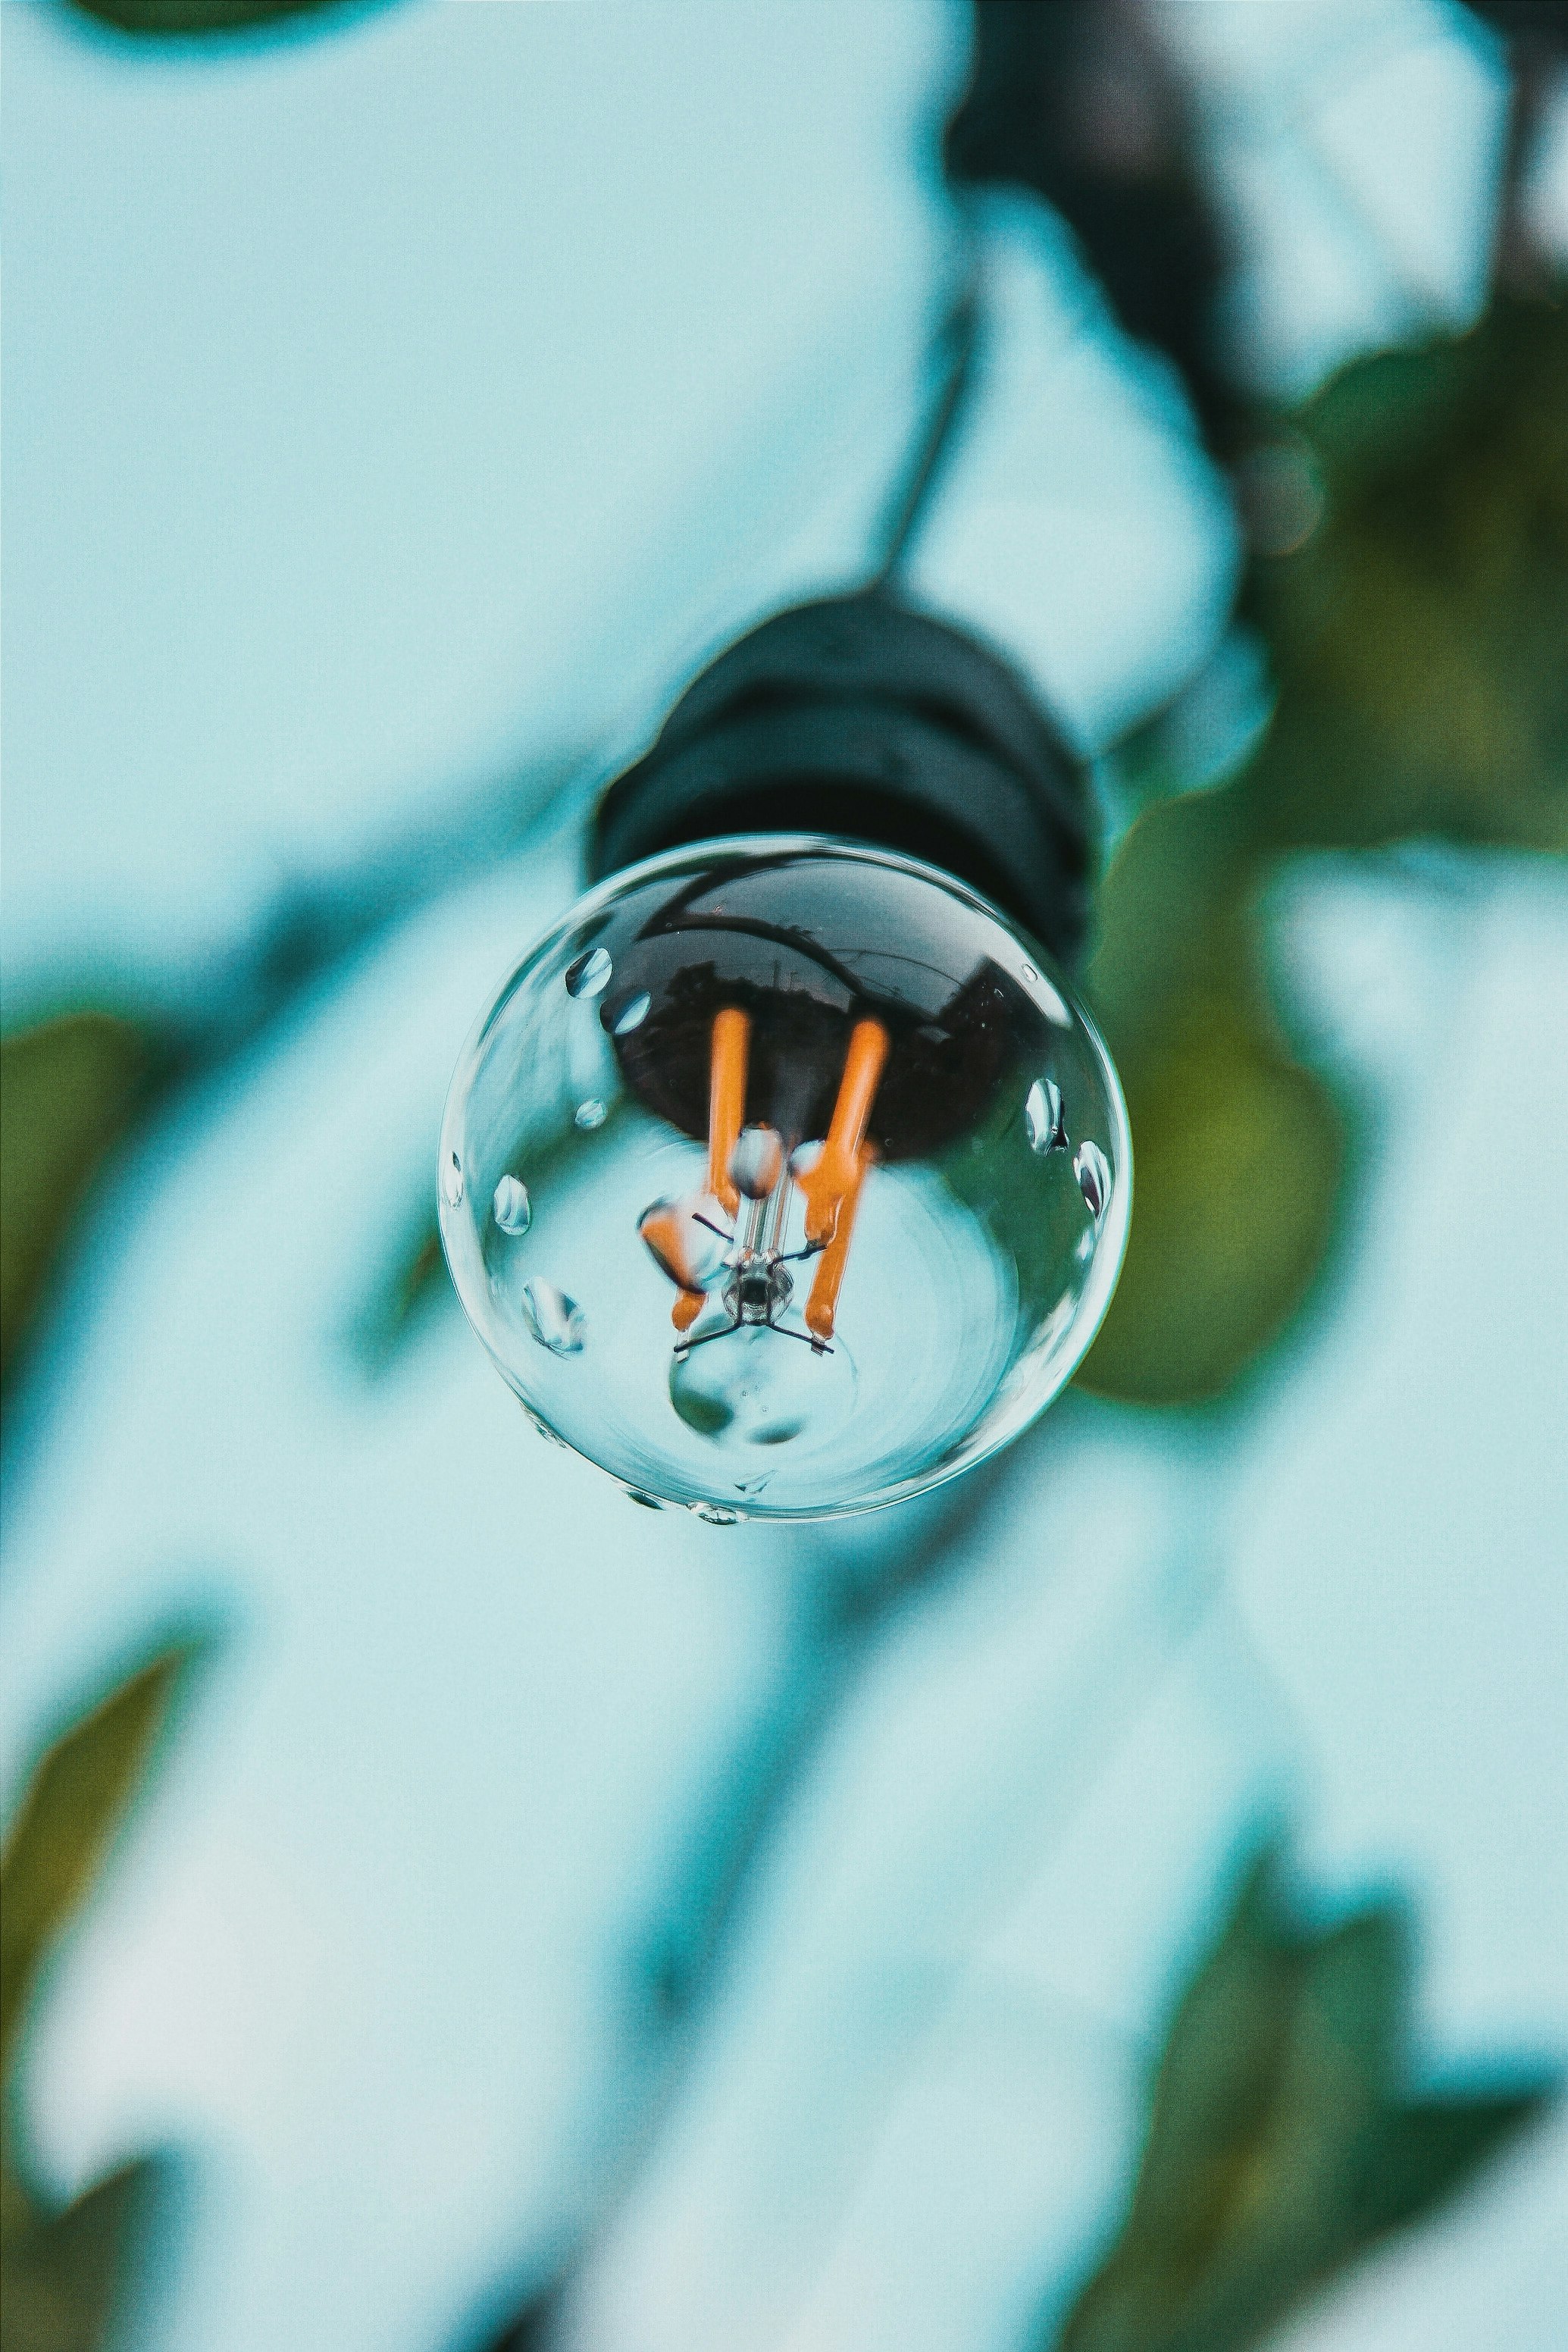 macro photography of turned-off light bulb